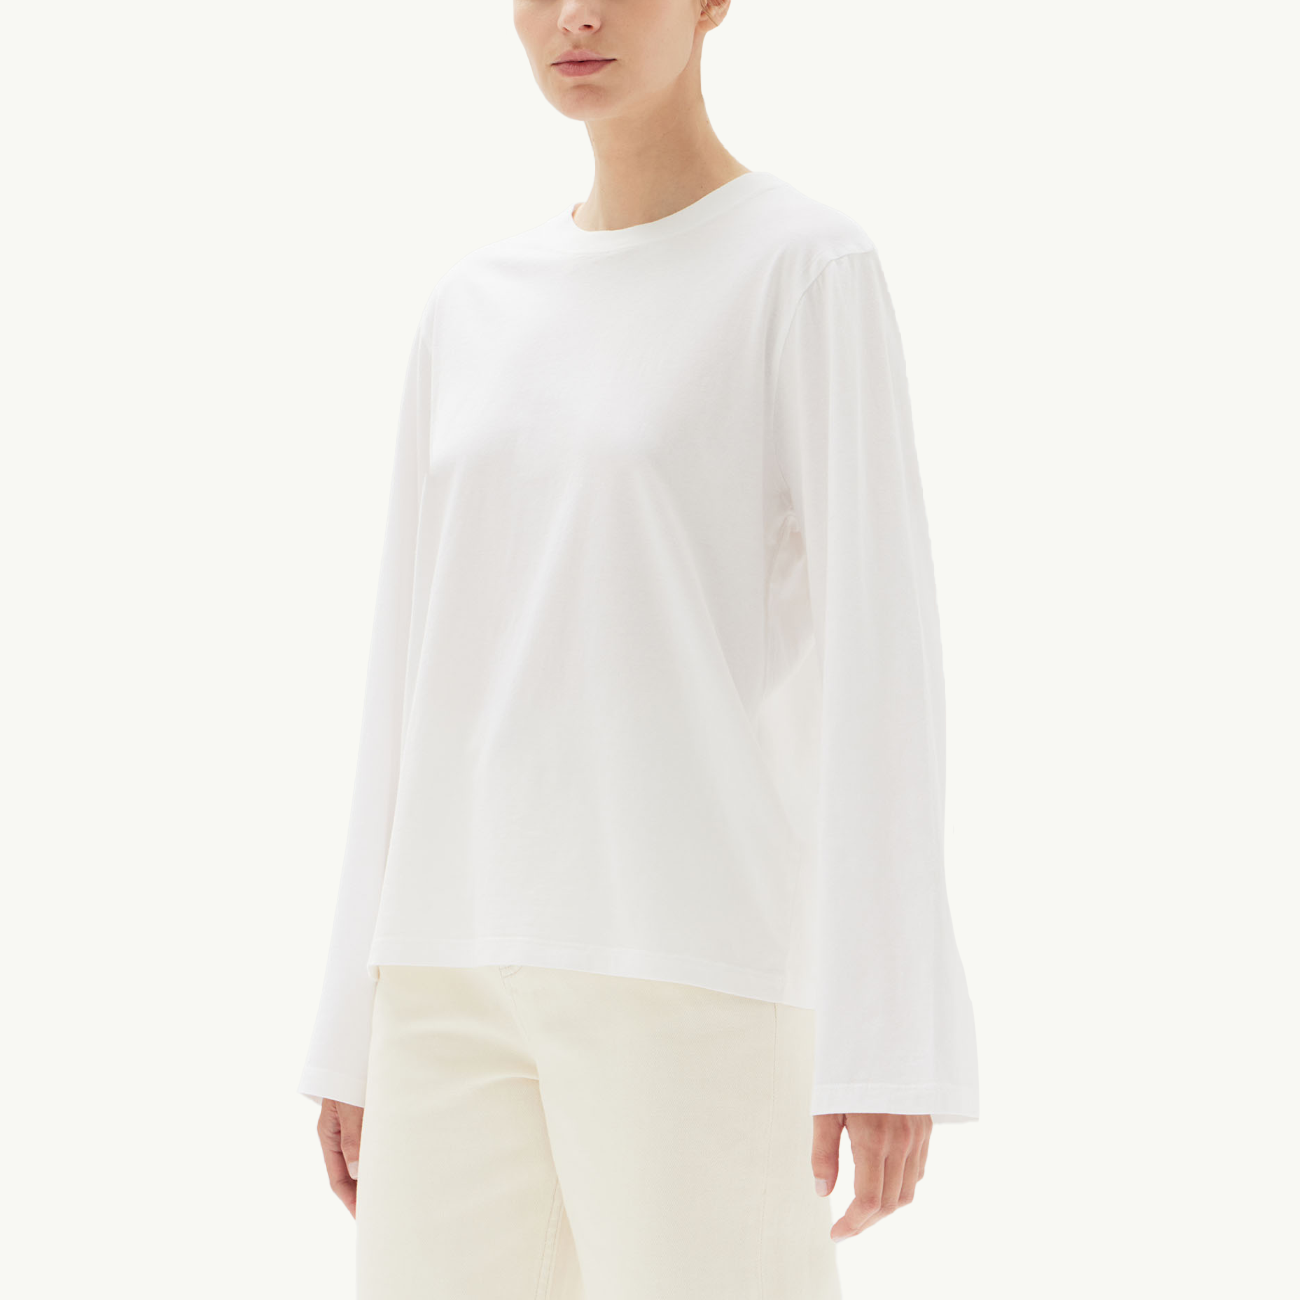 Mimi Long Sleeve Top - White